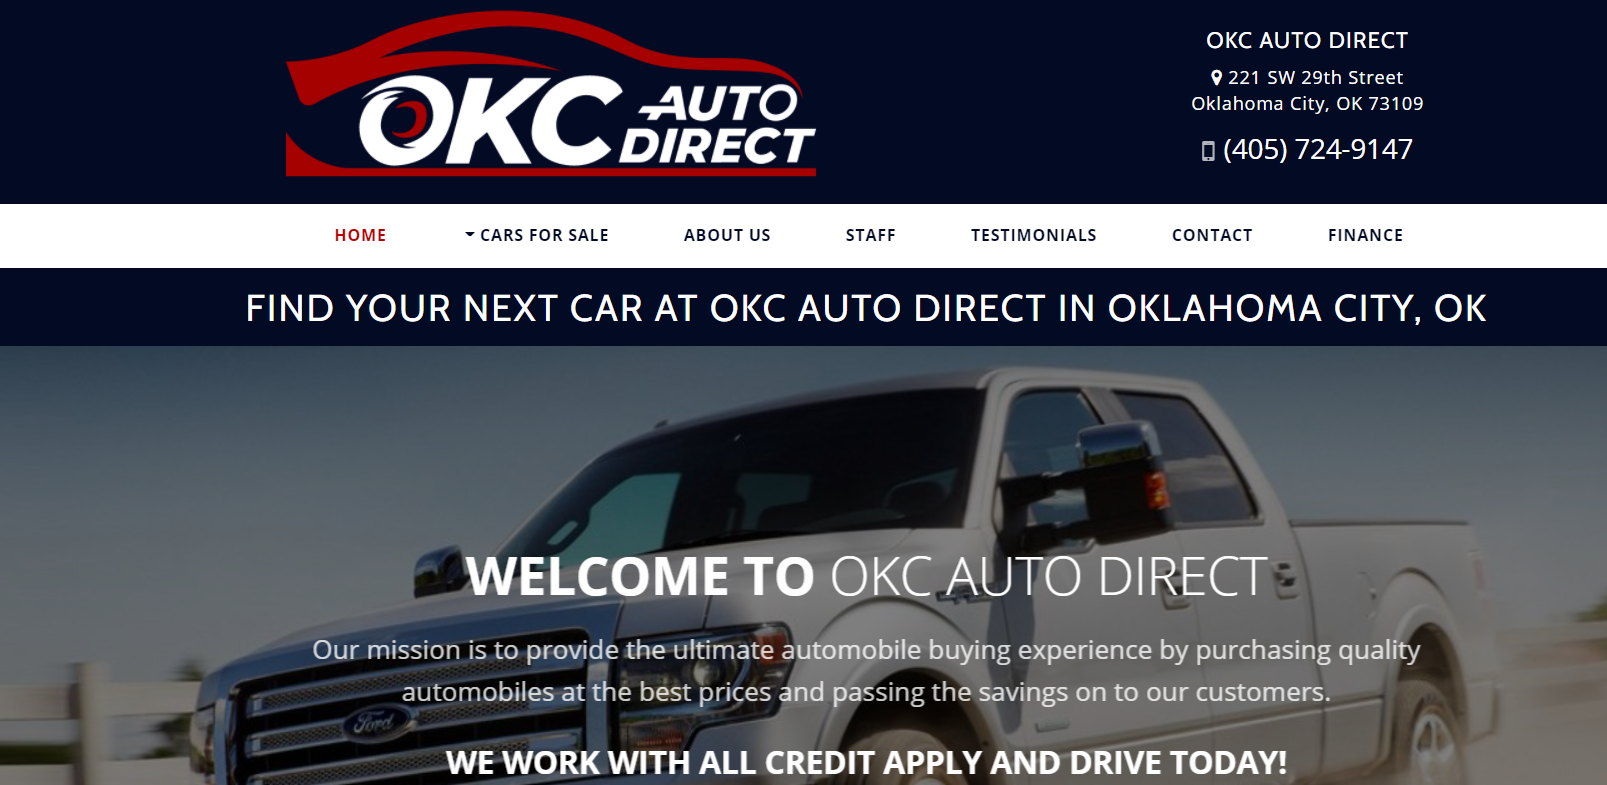 OKC Auto Direct in Oklahoma City